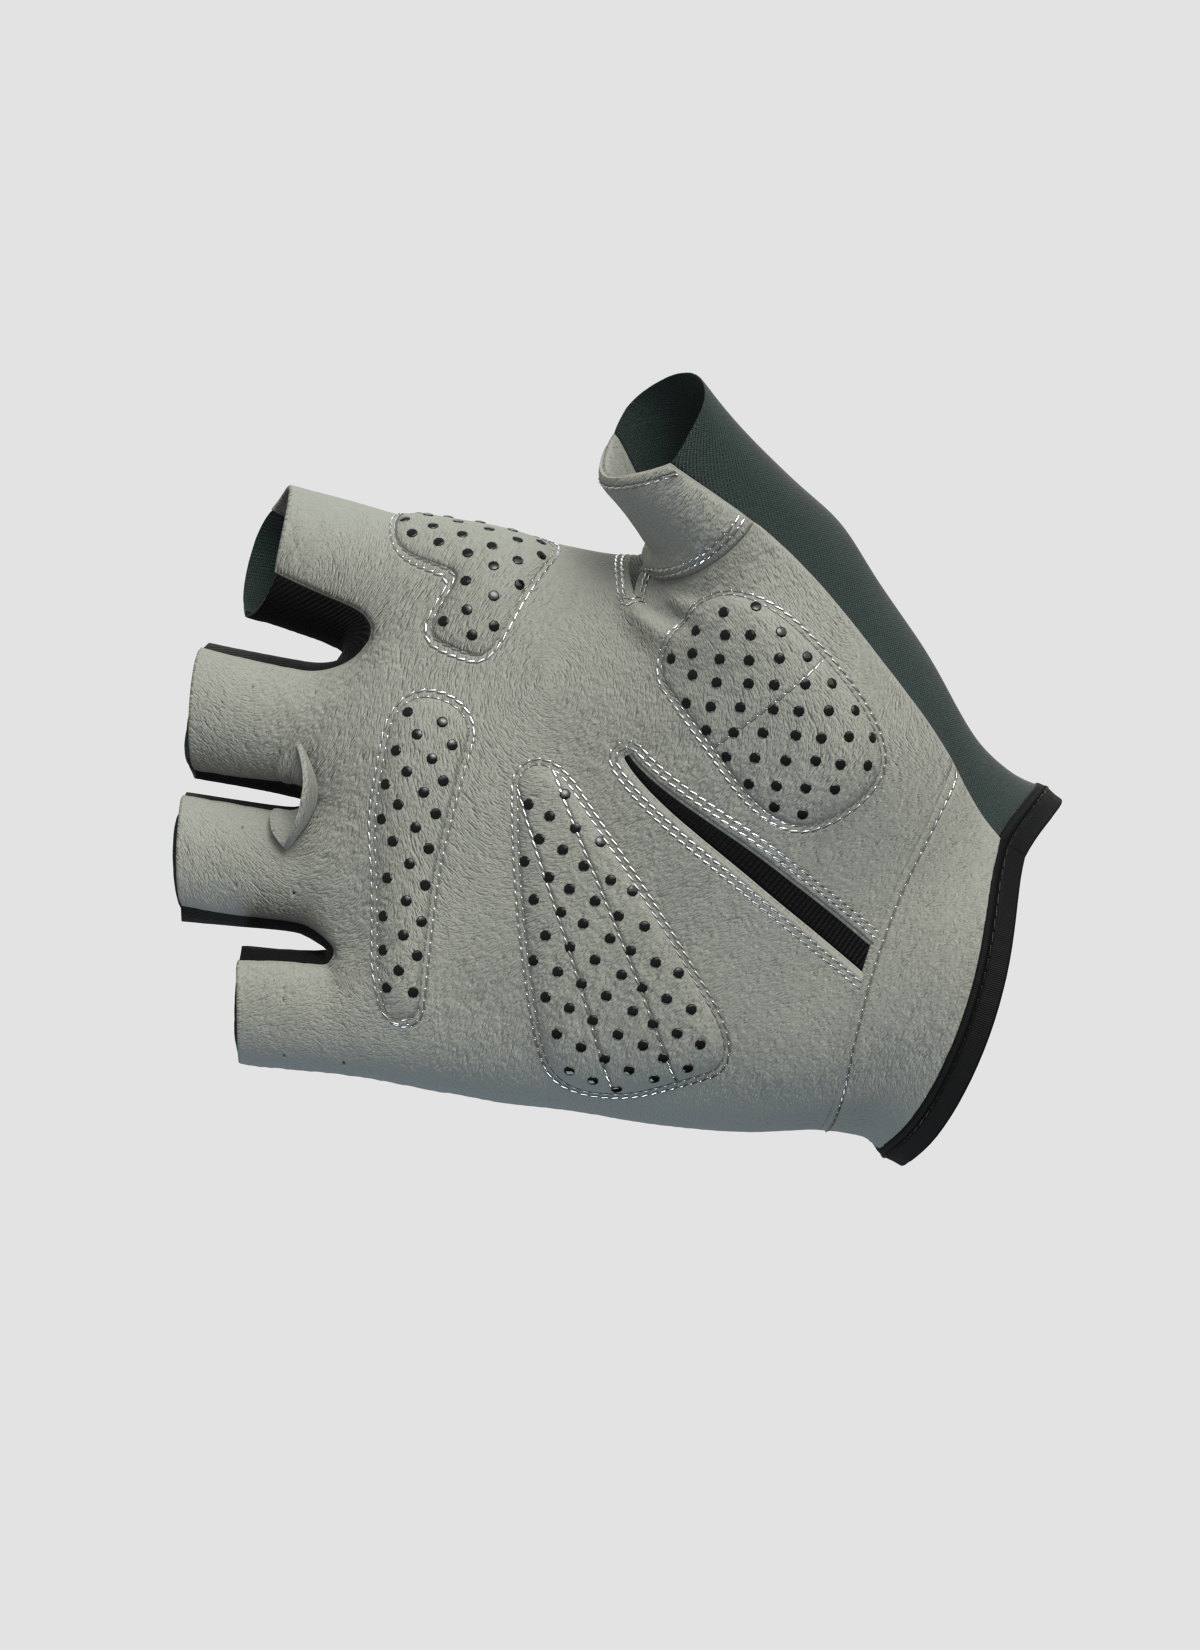 Essentials TEAM Glove - Charcoal